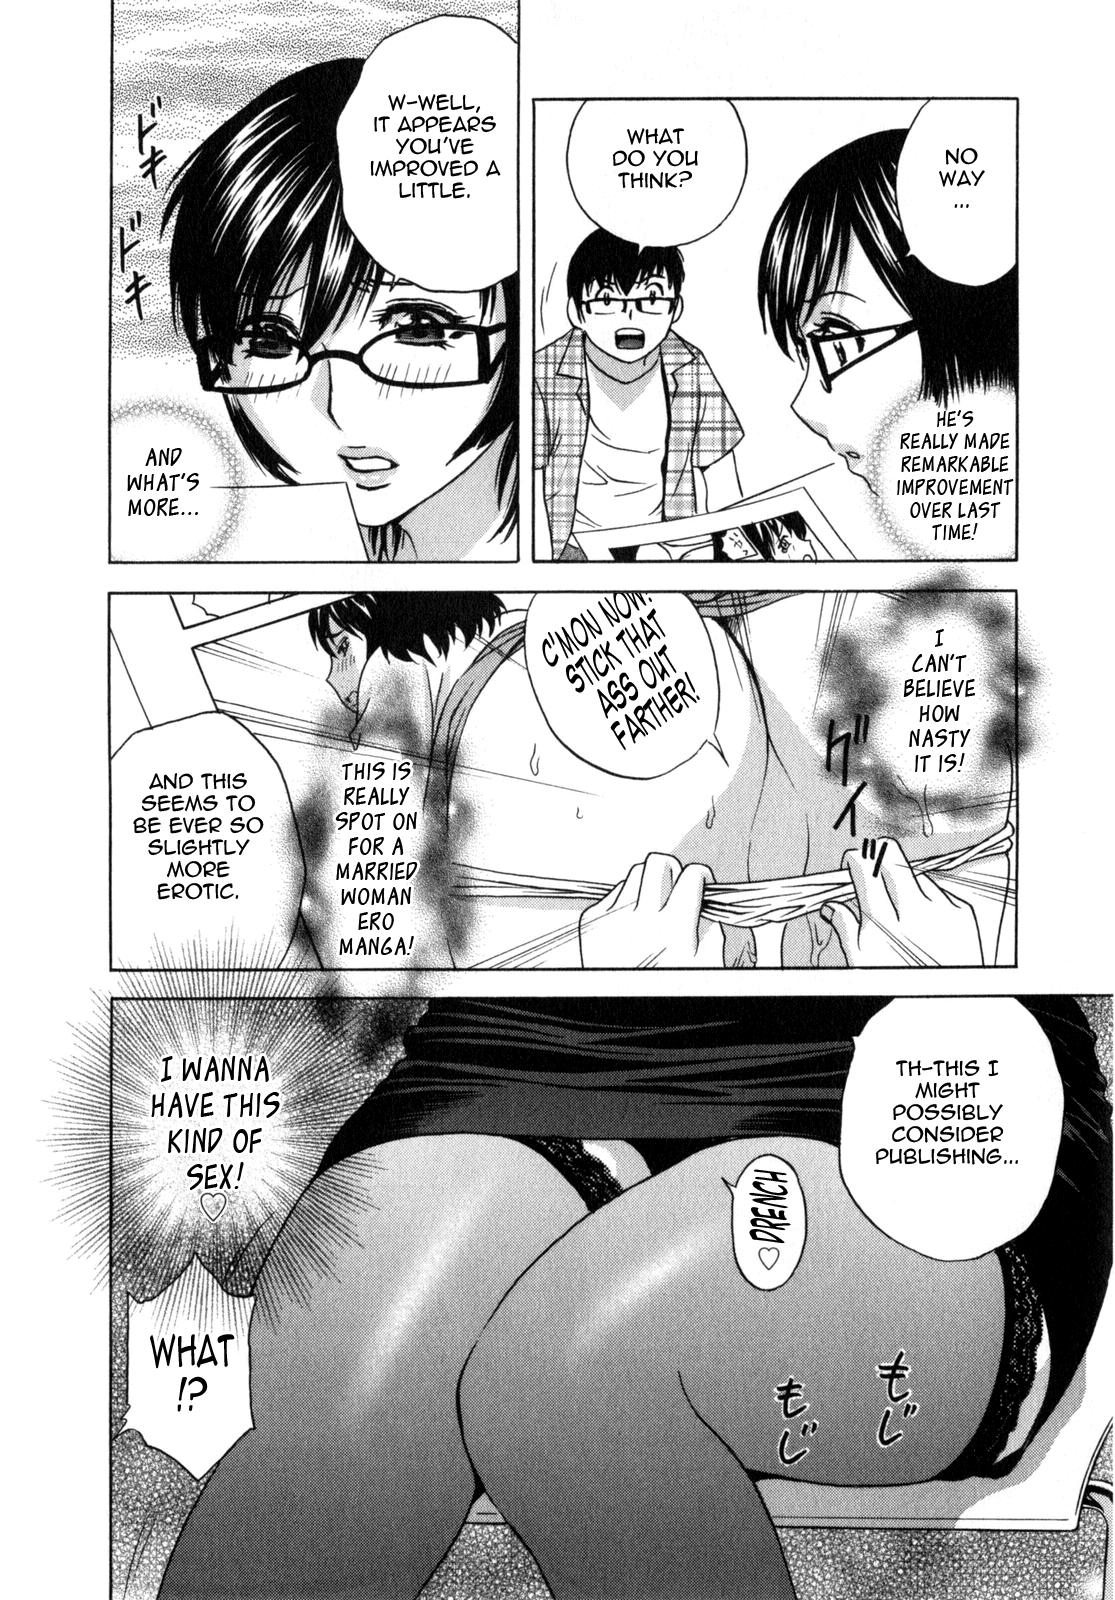 [Hidemaru] Life with Married Women Just Like a Manga 1 - Ch. 1-9 [English] {Tadanohito} 109